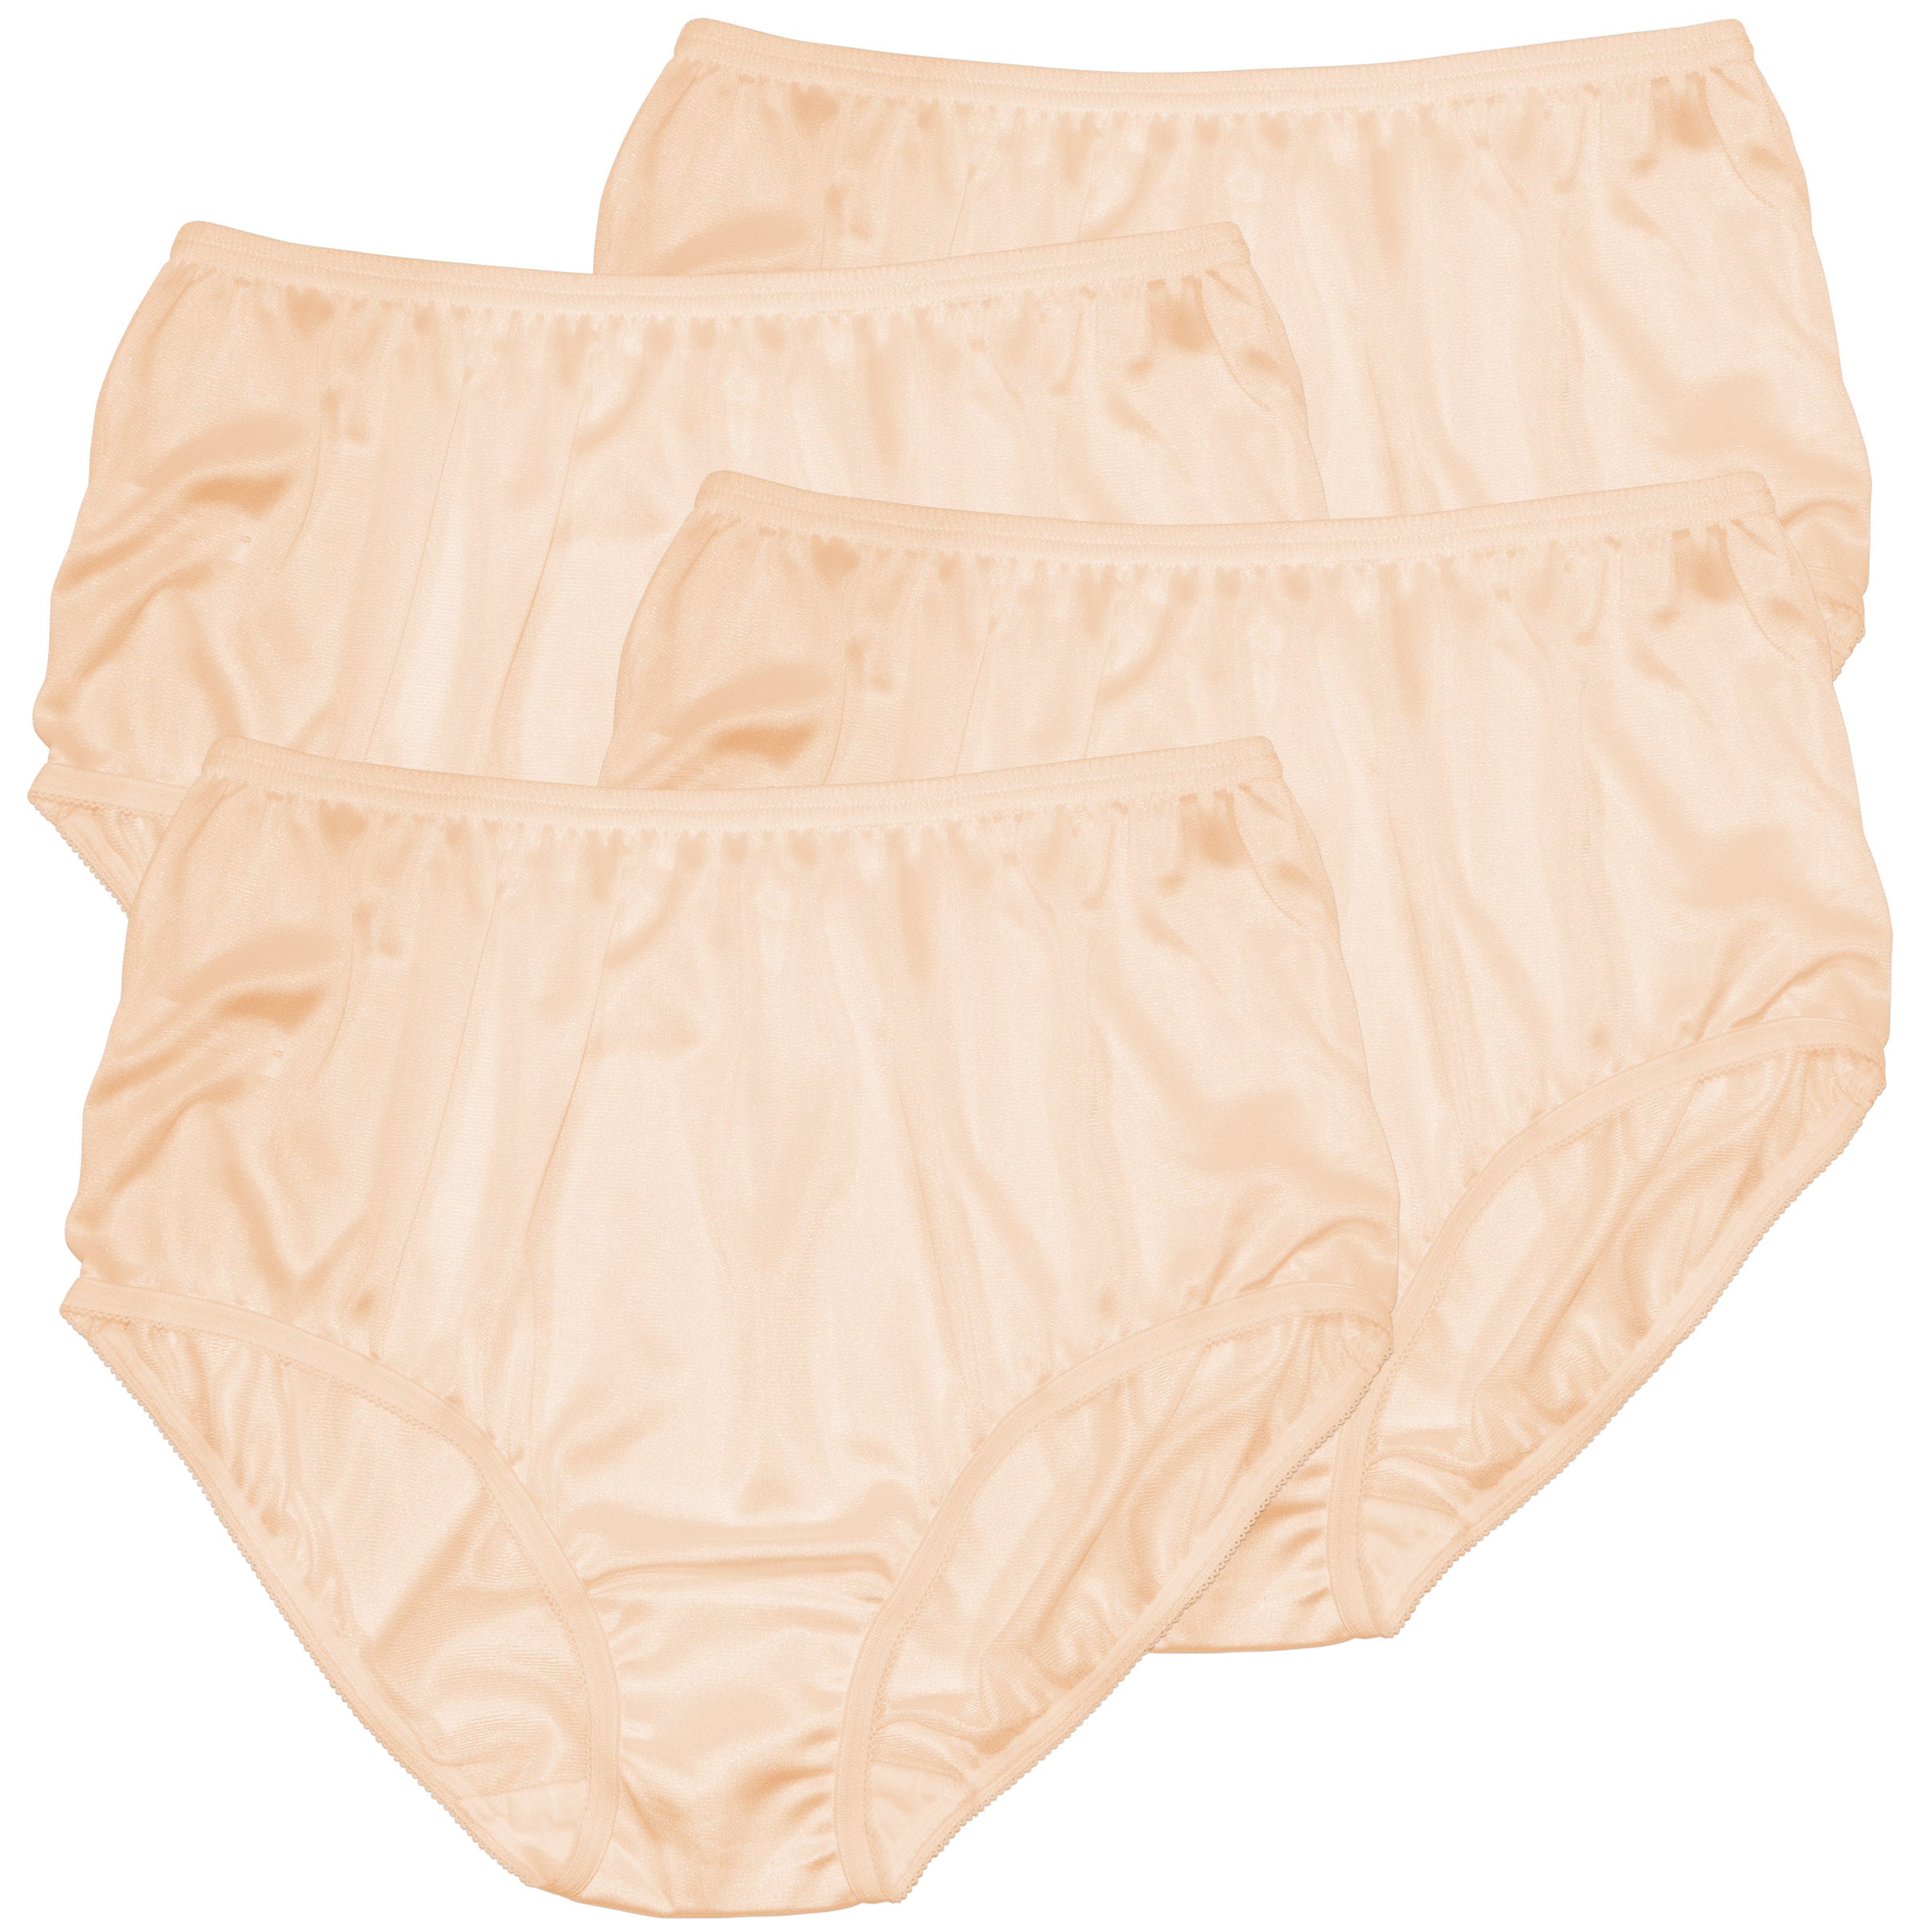 Classic Nylon, Full Coverage Brief Panty Beige 4 Pack (Plain Jane)